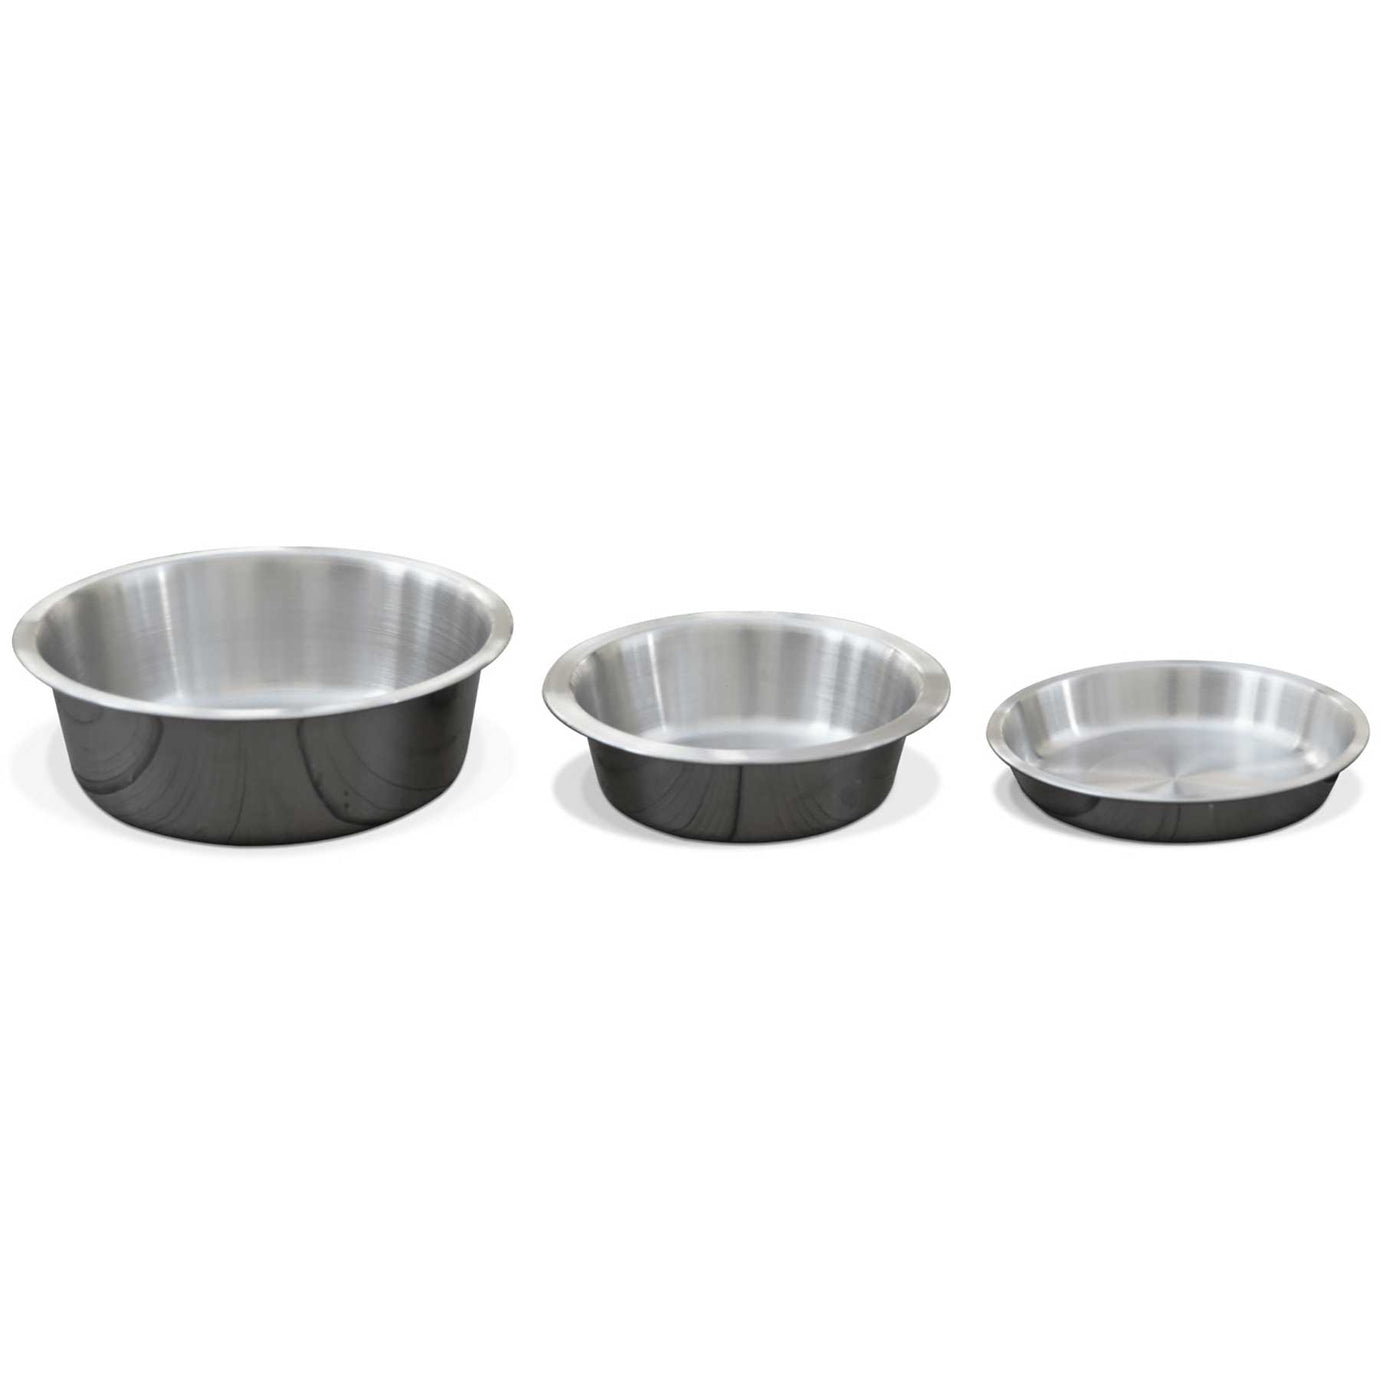 PetFusion Premium 304 Food Grade Stainless Steel Pet Food Bowls. SKUS: PF-SB1,PF-SB2,PF-SB3